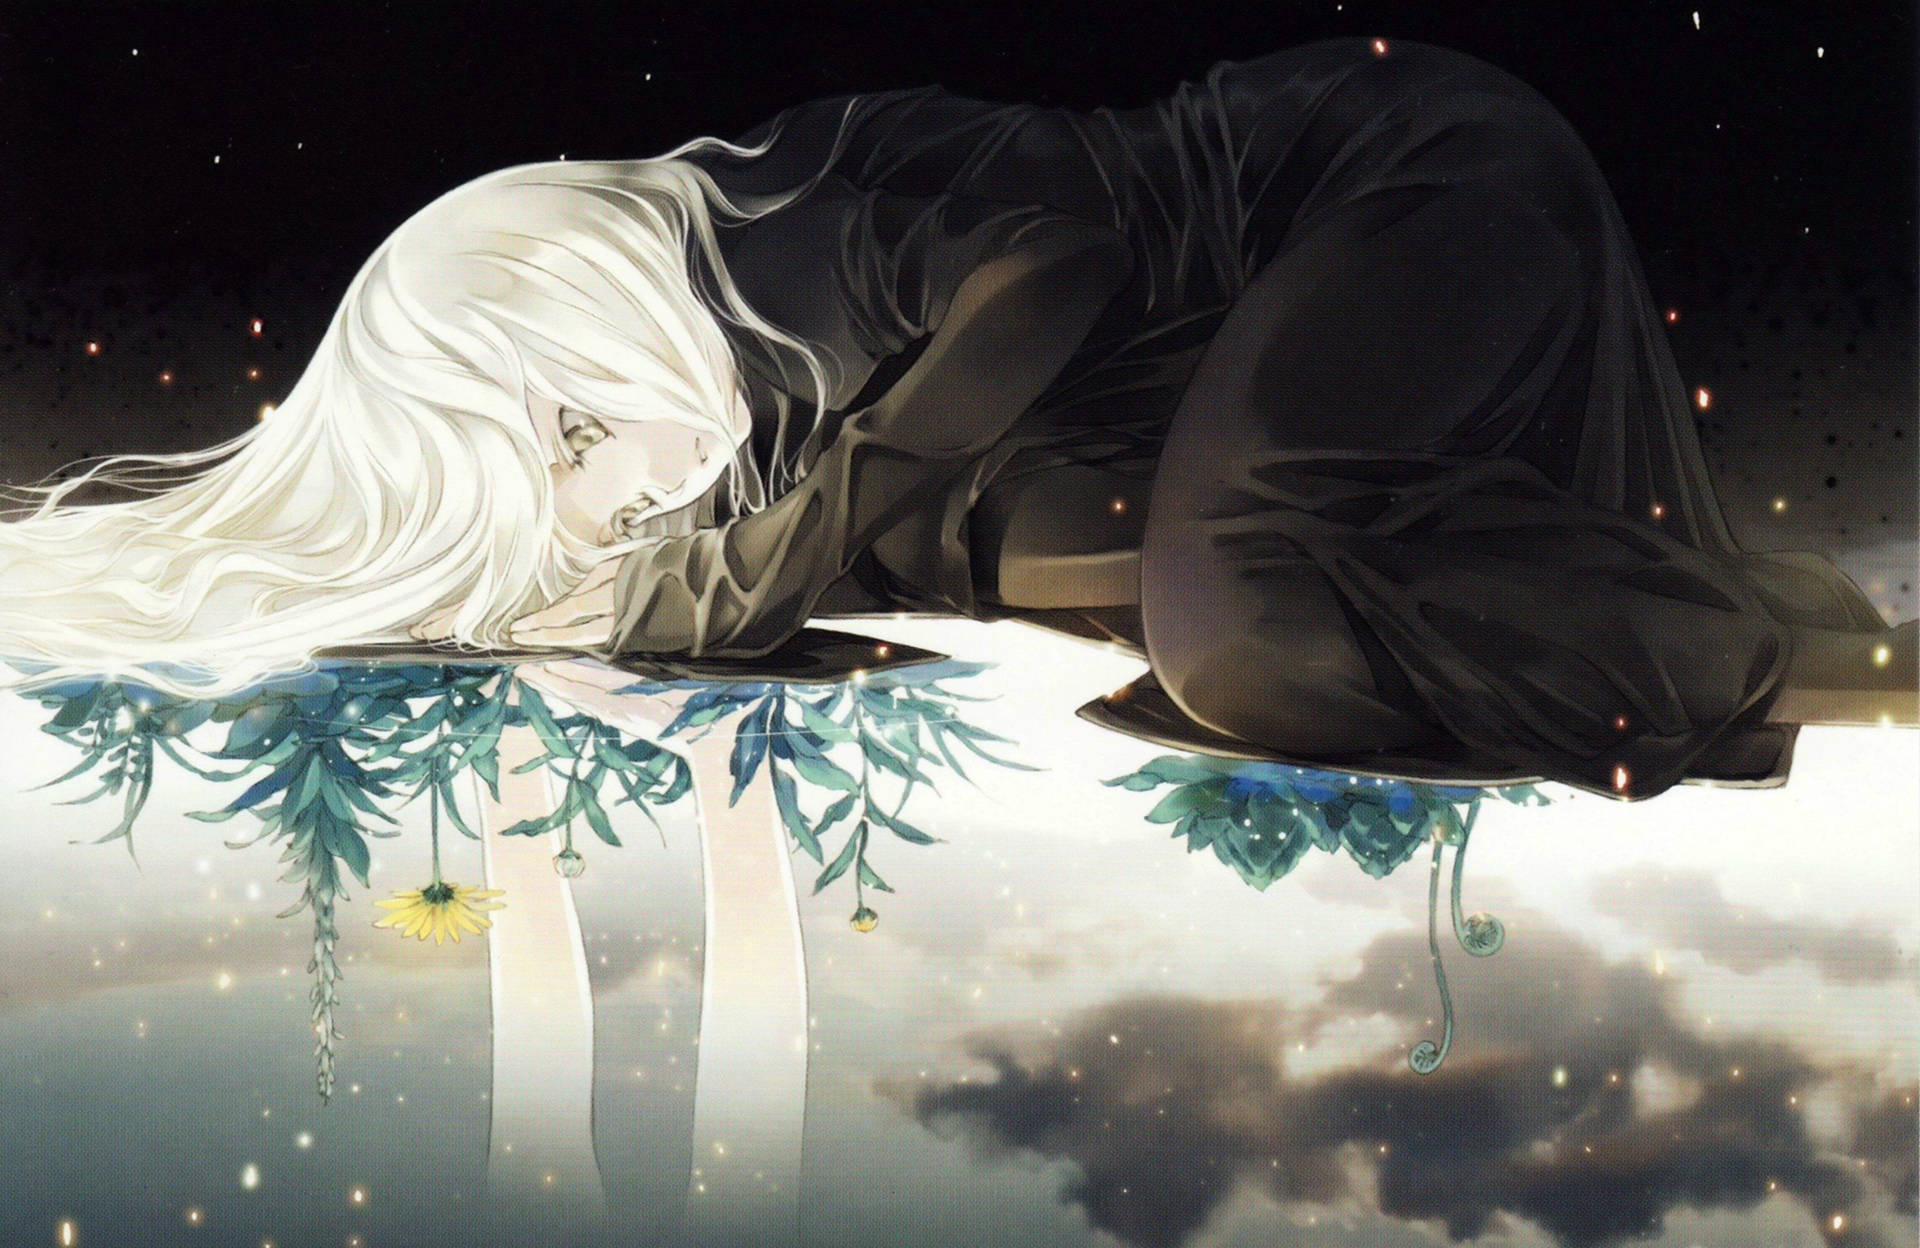 Anime Girl Sad Alone On Reflective Water Wallpaper